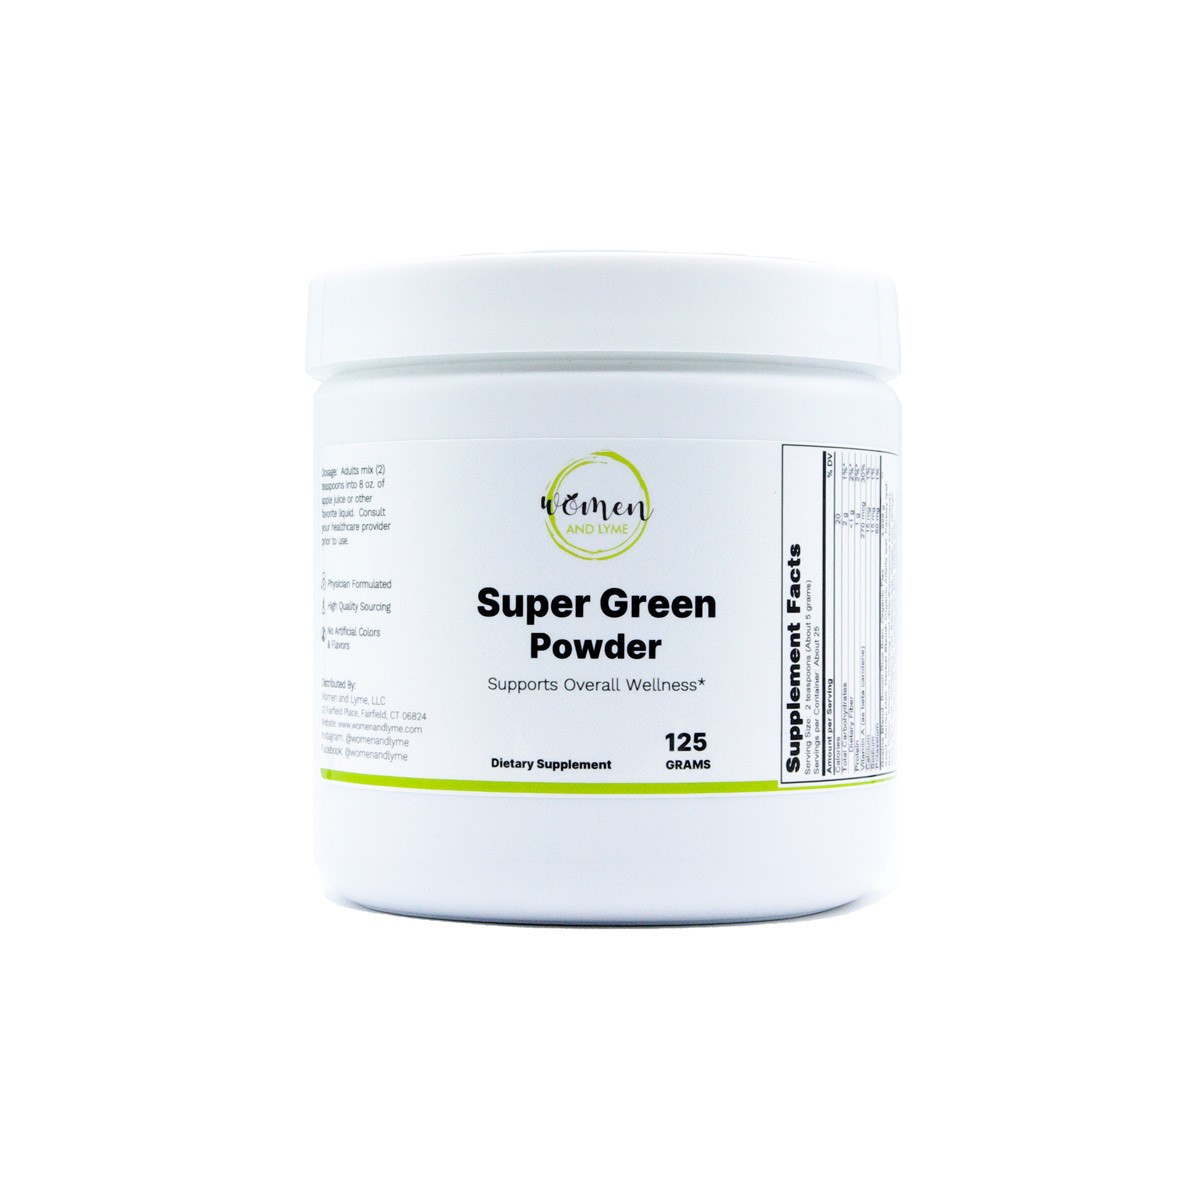 Super green powder